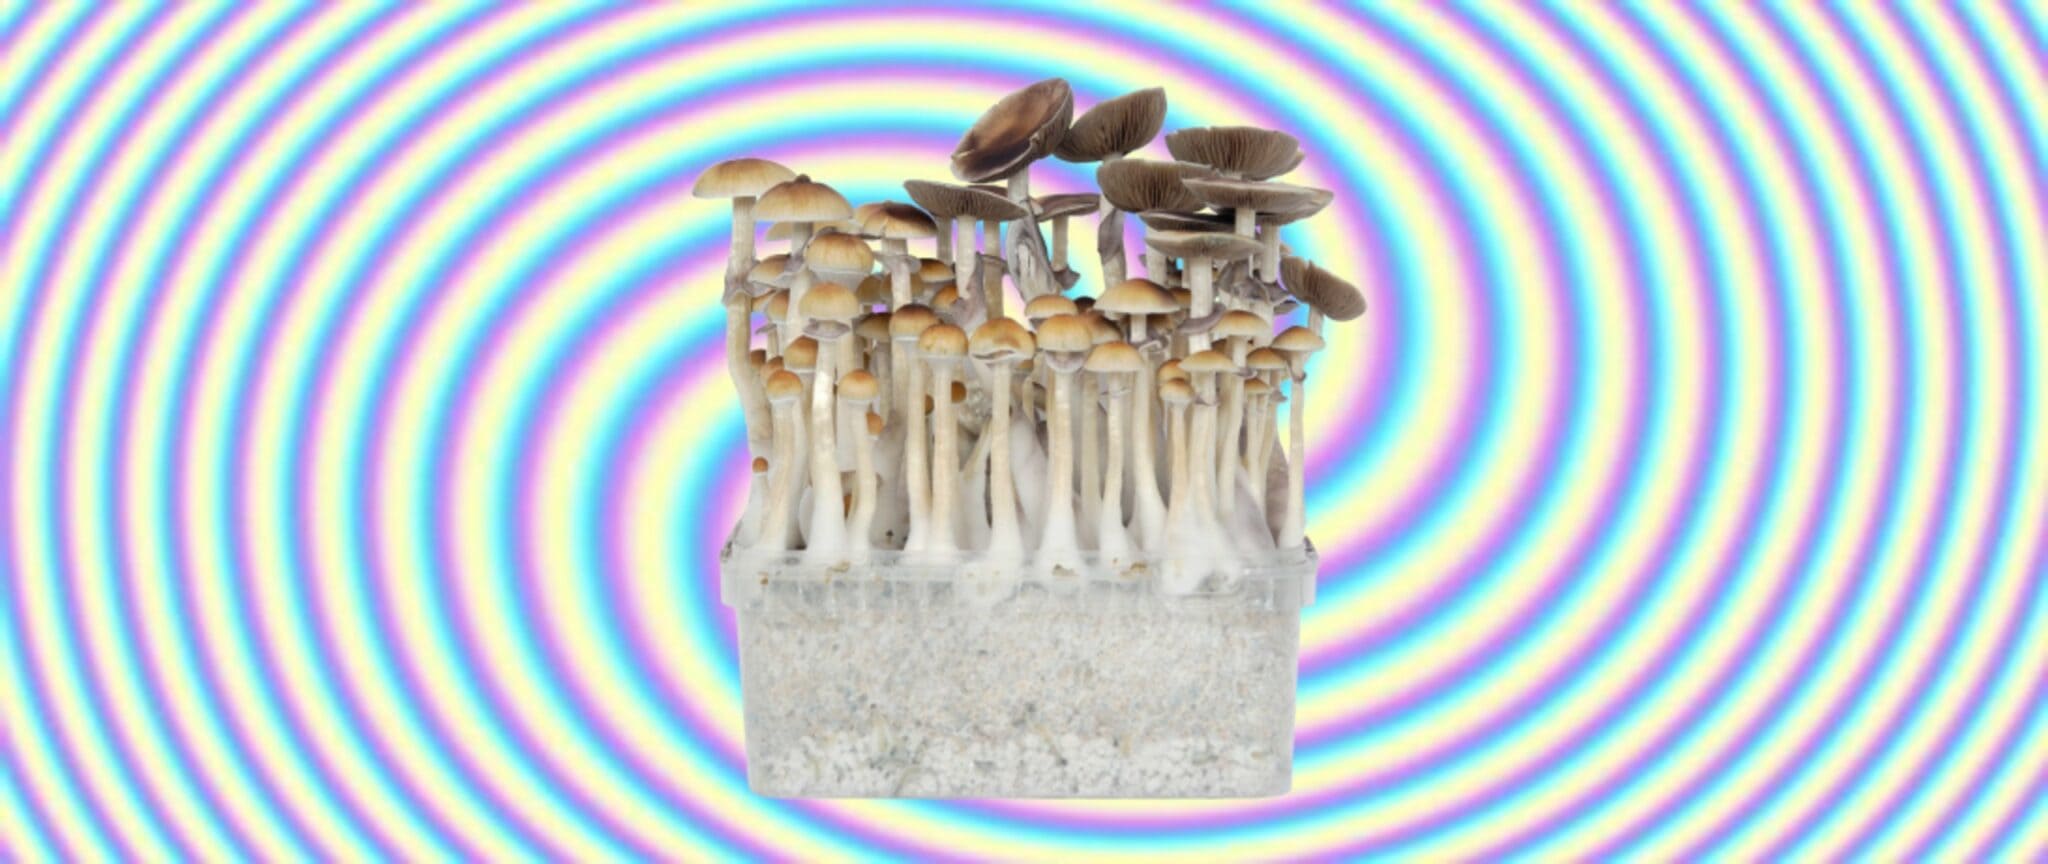 magic mushroom grow kit on psychedelic swirl background